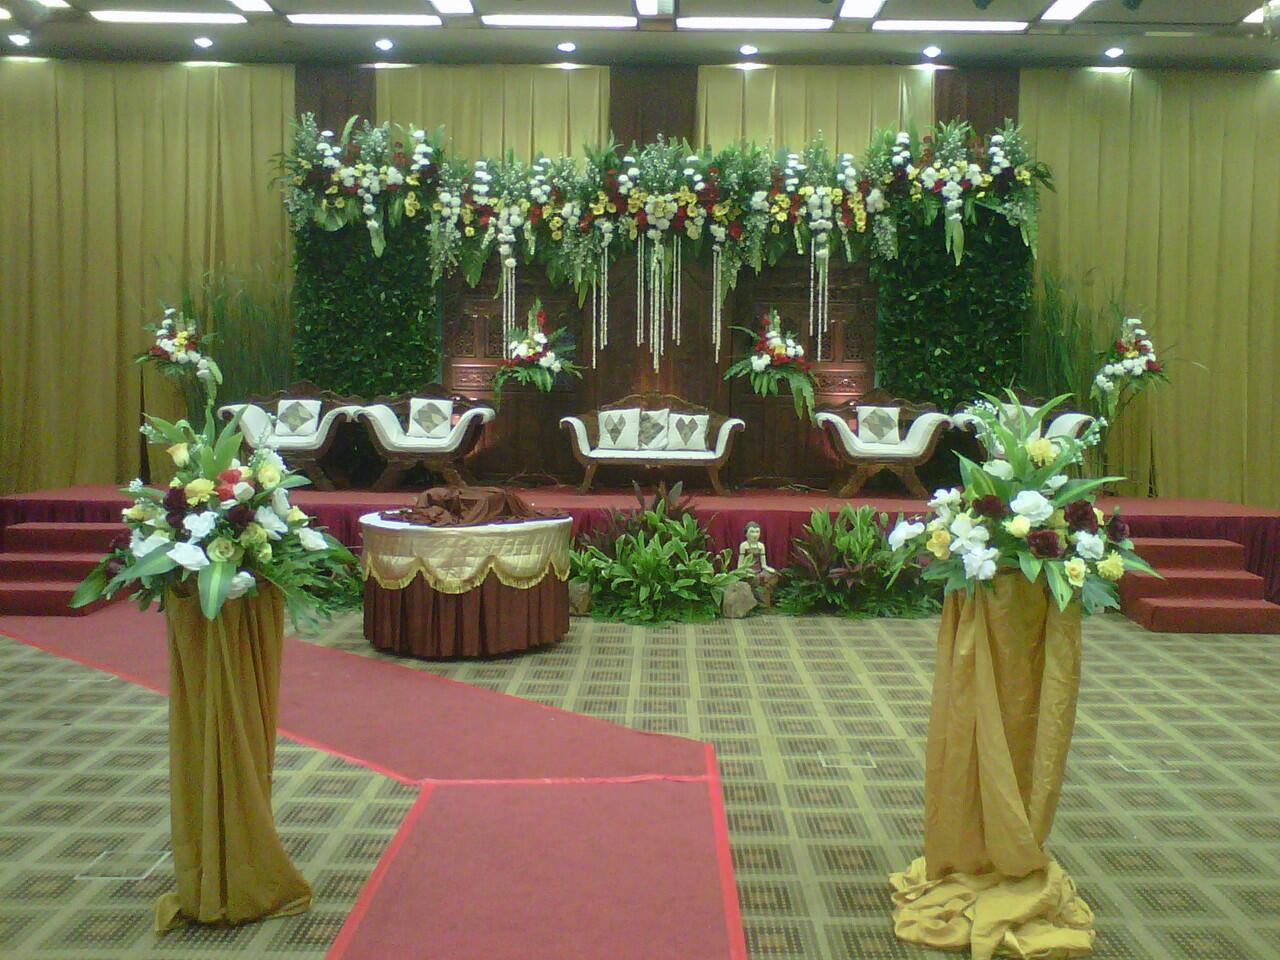  Paket Pernikahan Gedung Indoor Outdoor Jakarta Pusat Murah  KASKUS